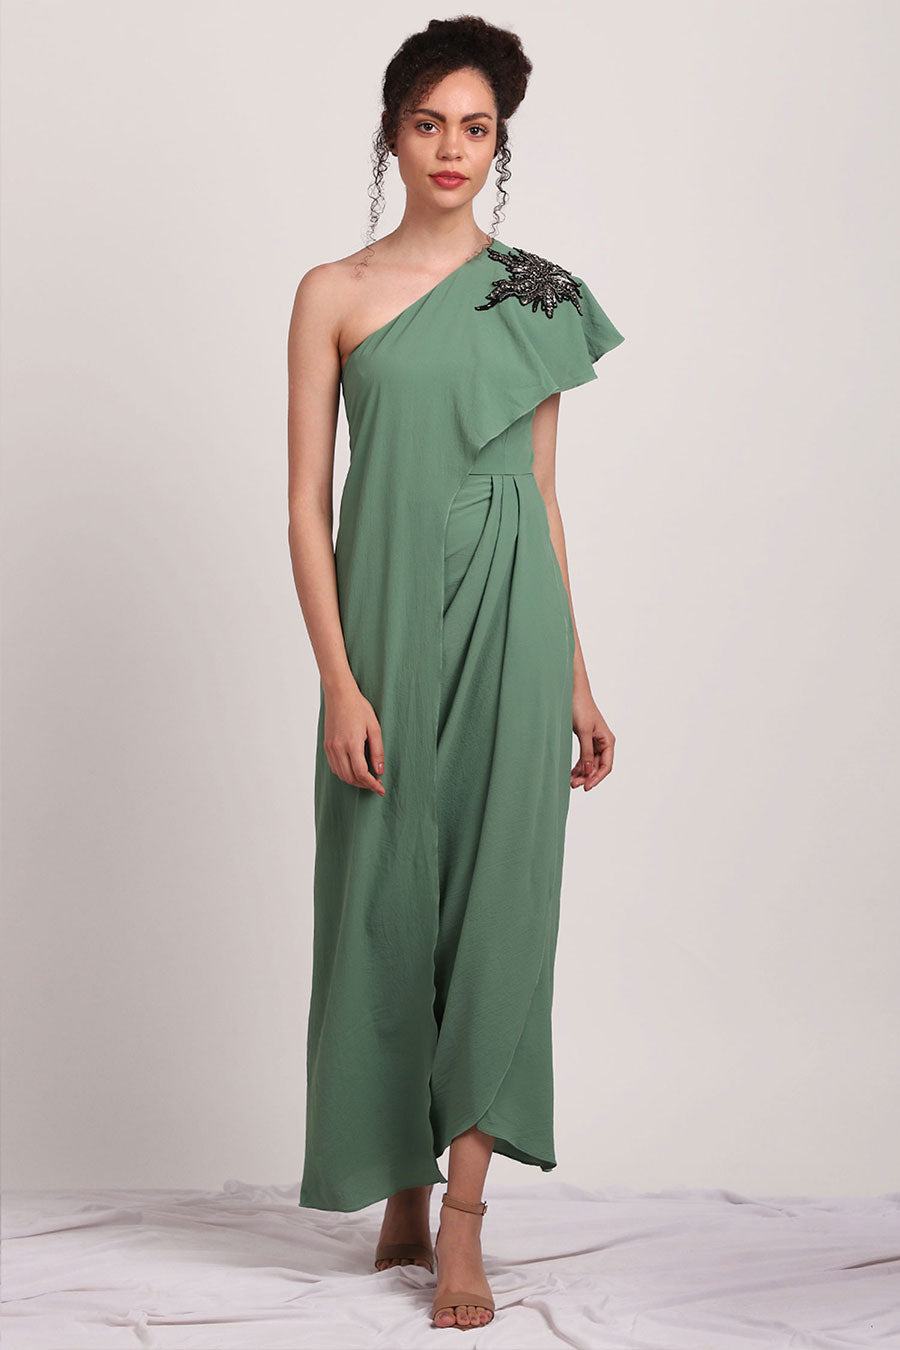 Fern Drape Green Dress